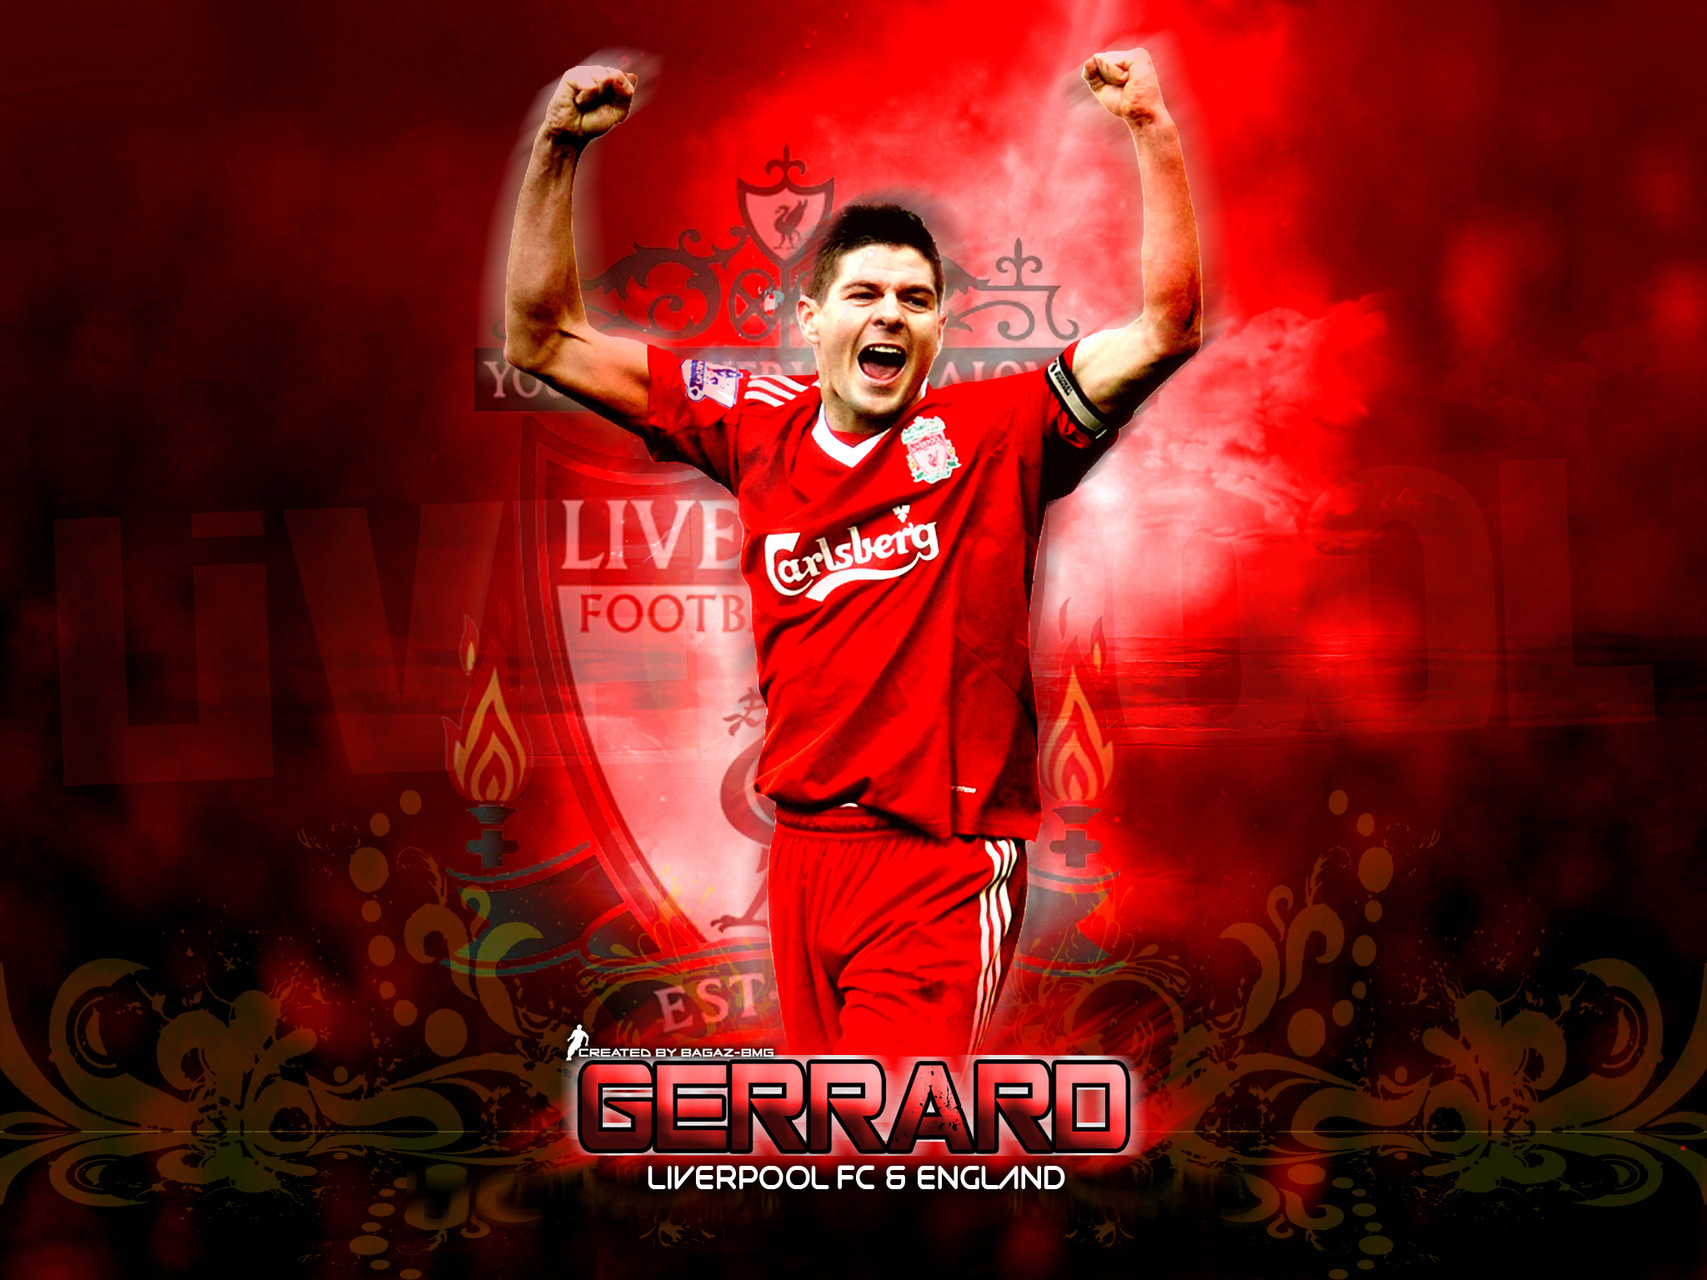 The Football Player Of Liverpool Steven Gerrard